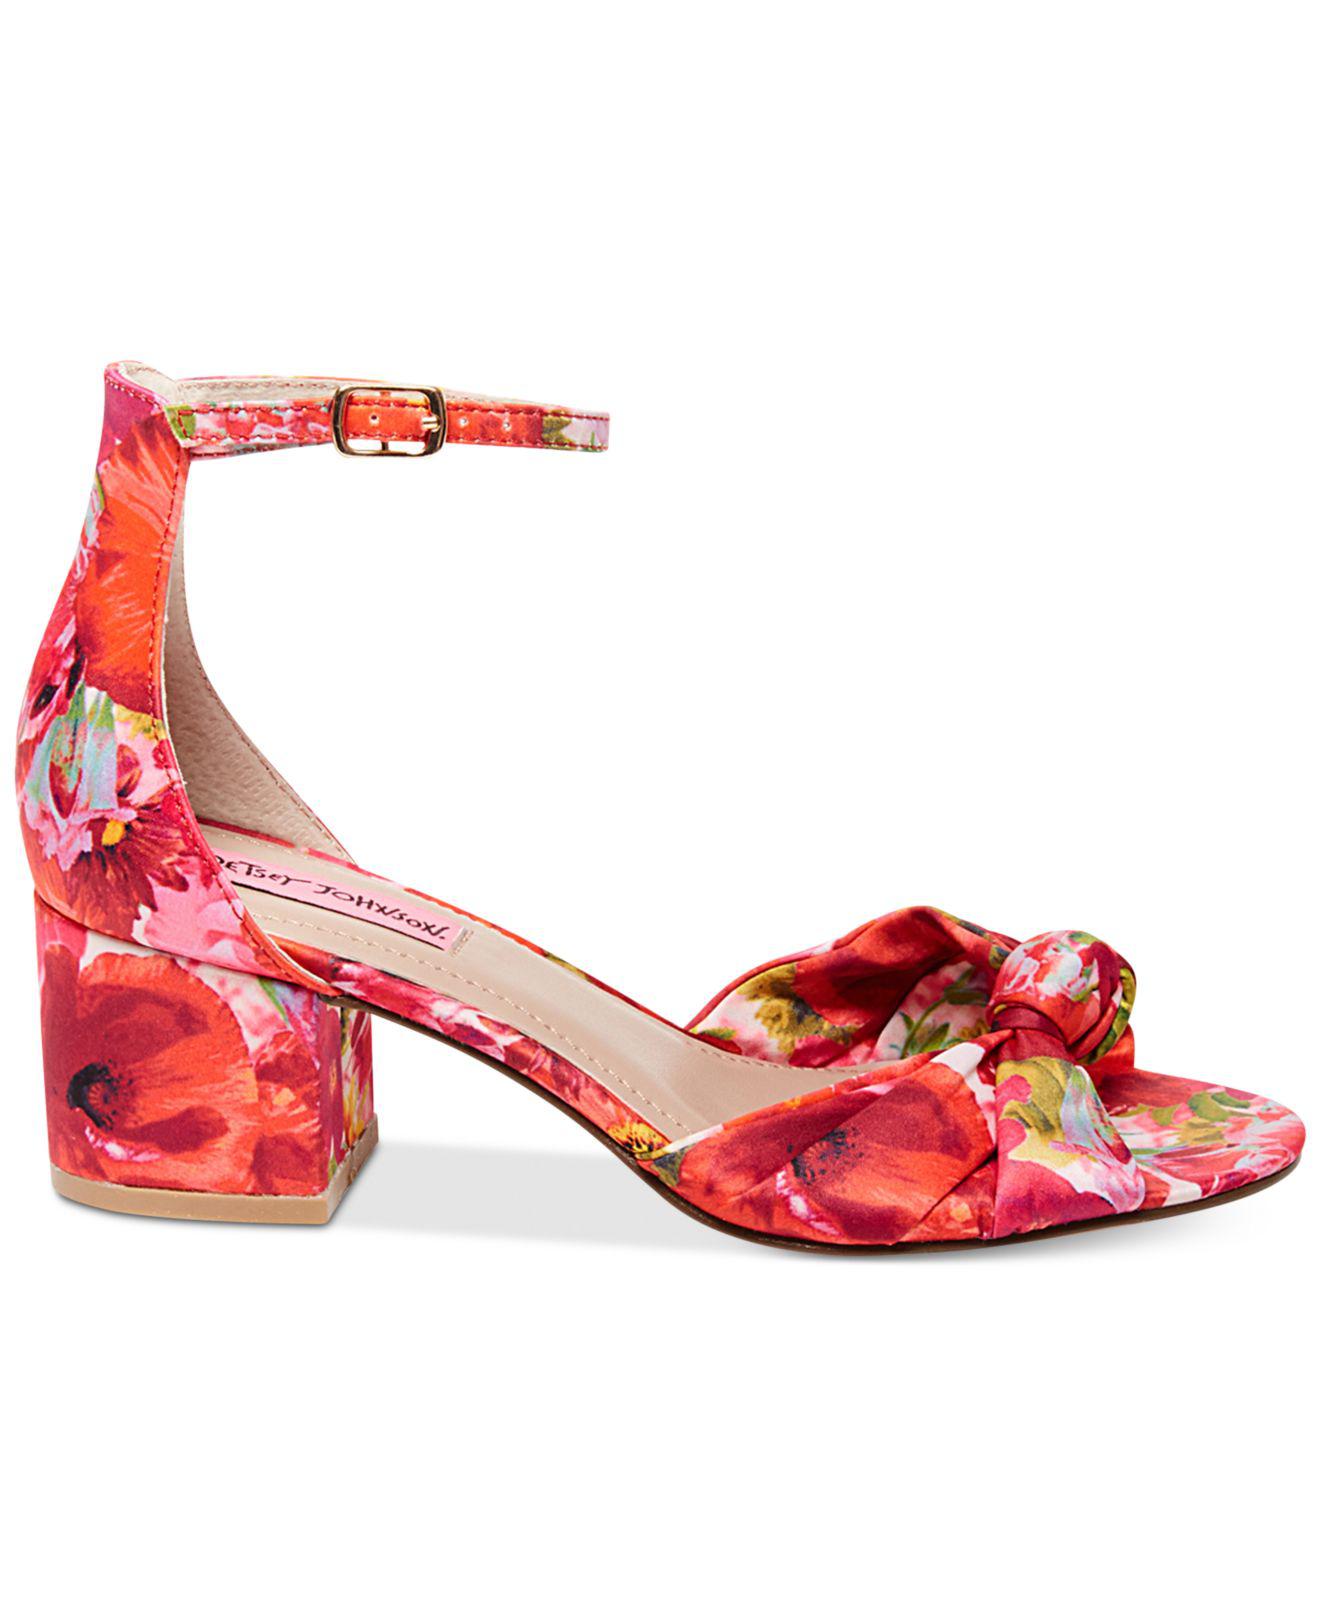 Betsey Johnson Ivee Block-heel Sandals in Floral (Red) - Lyst